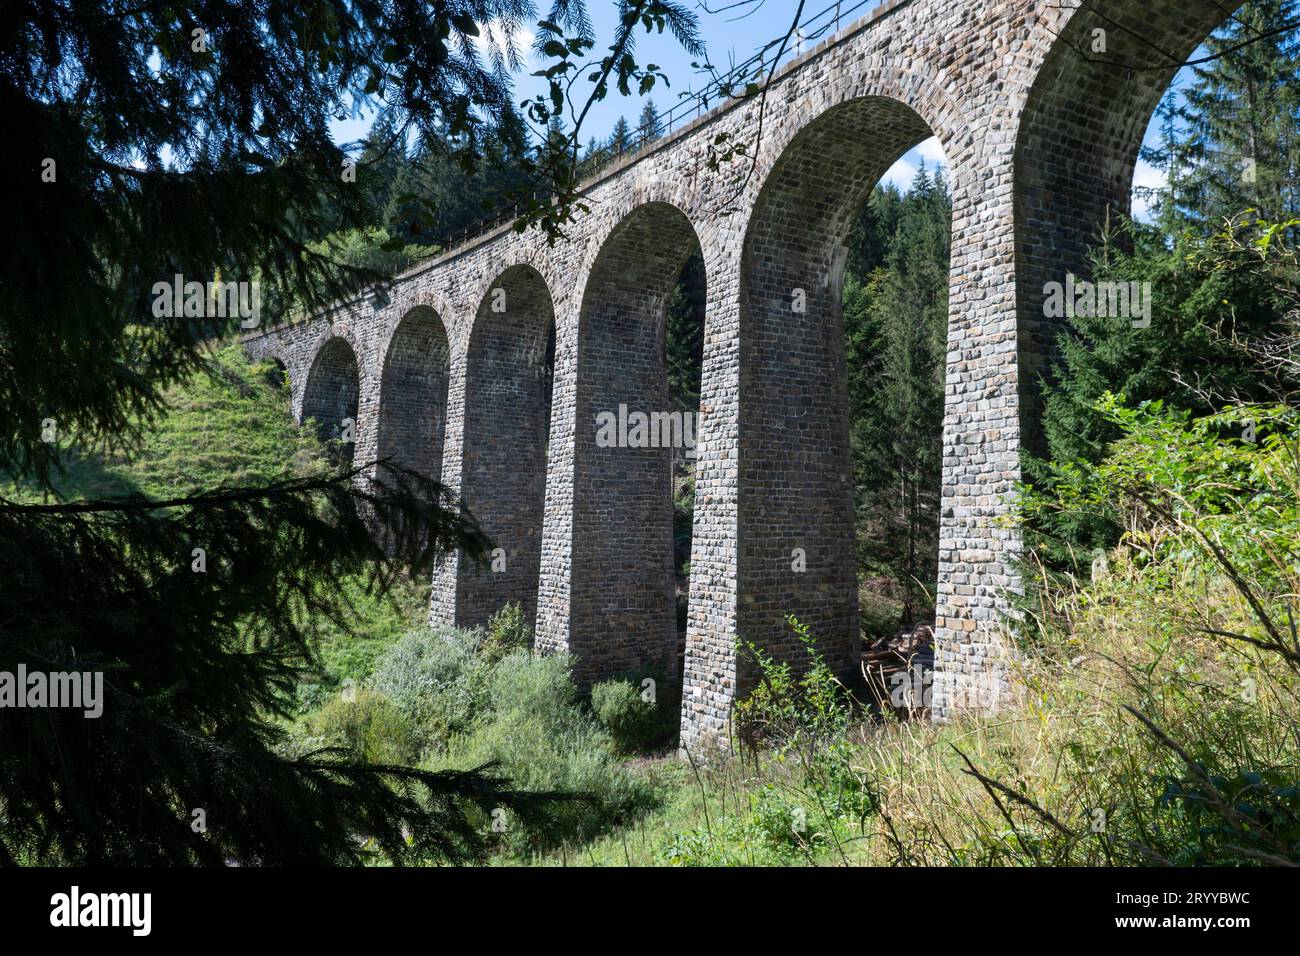 The Chmarossky Viaduct at Telgart village. Technical monument railroad bridge. Slovakia. Stock Photo